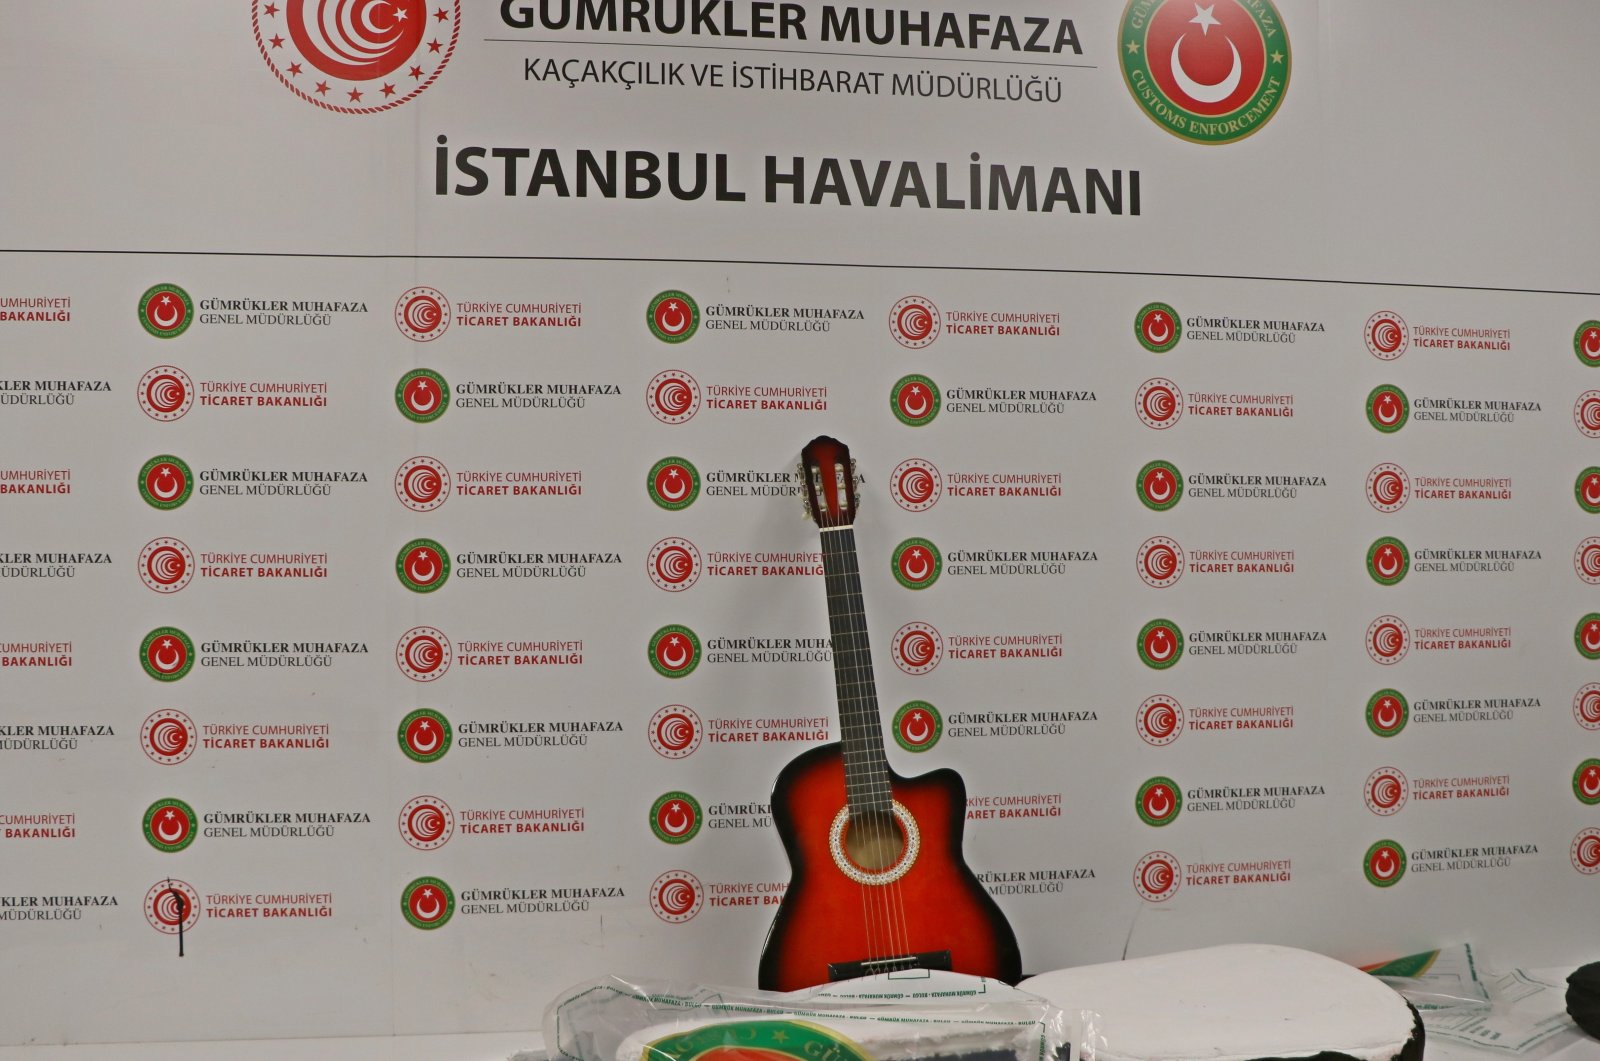 2.5 kilograms of methamphetamine was found in a guitar case at Istanbul Airport, Jan. 25, 2023. (IHA Photo)